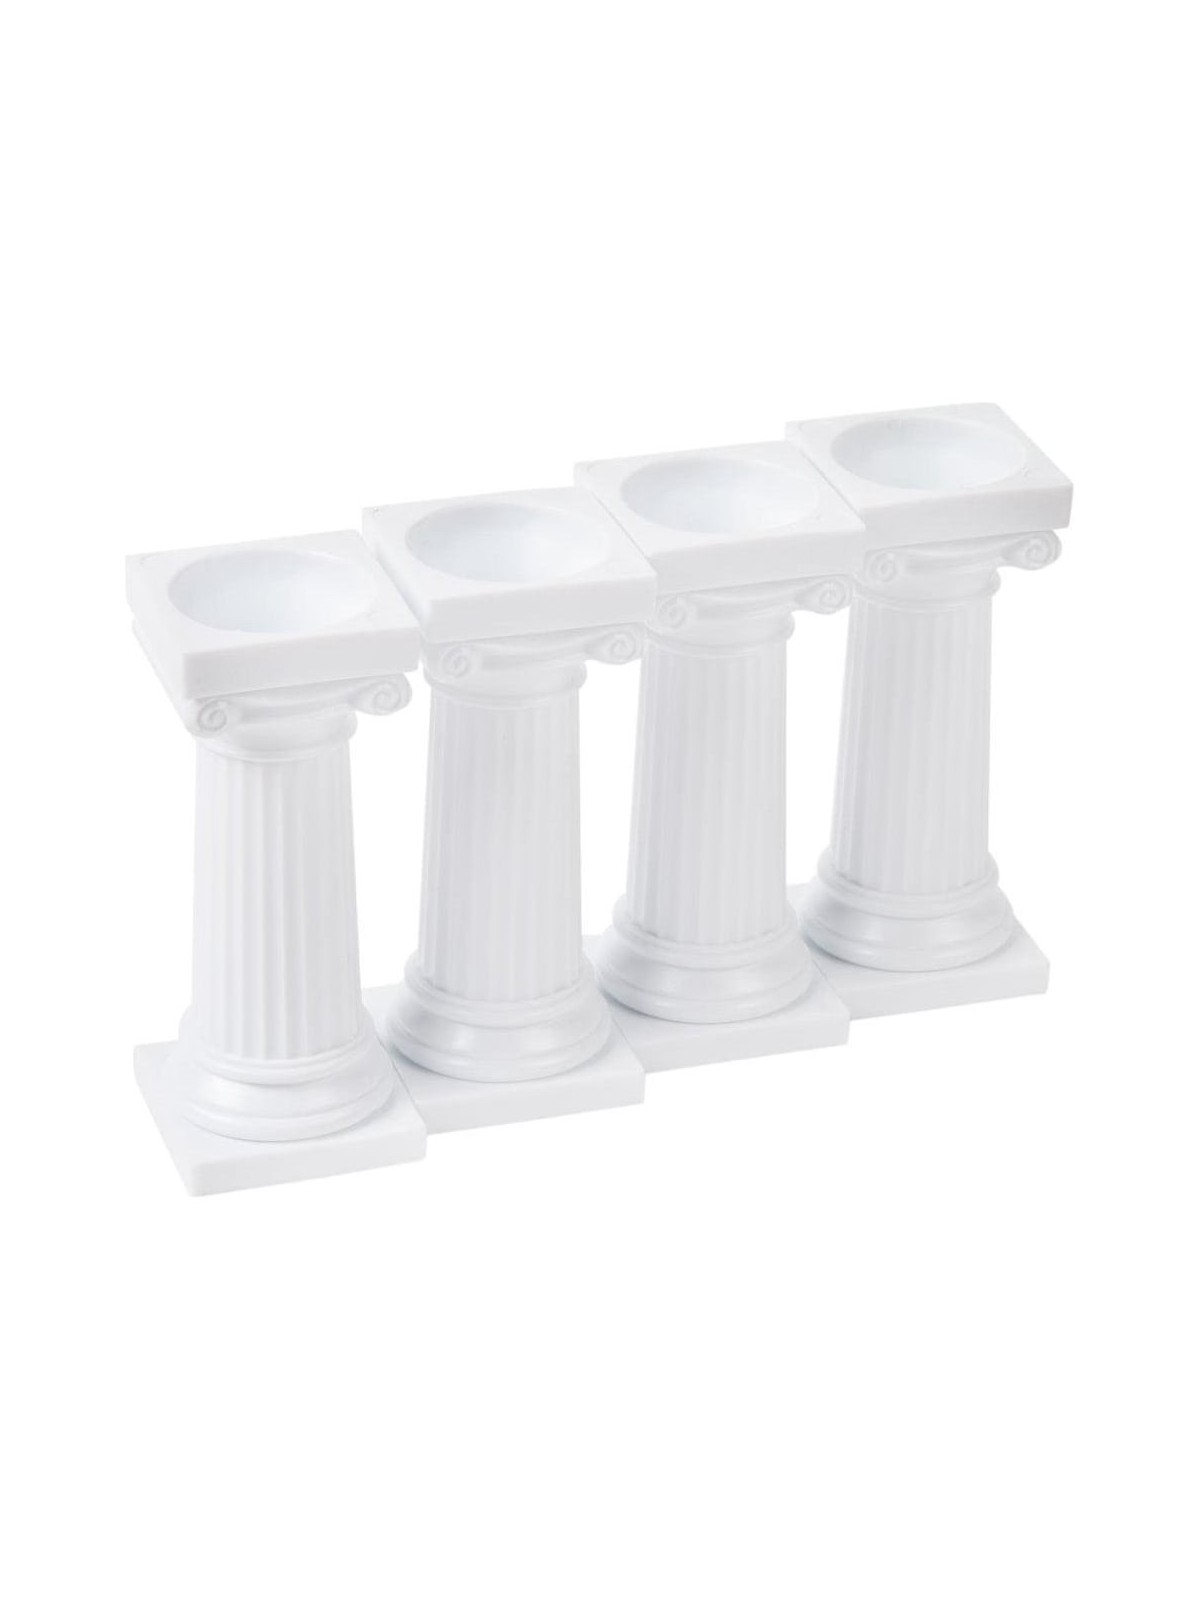 Caketools - Griechische Säulen - 4 Stück 8cm